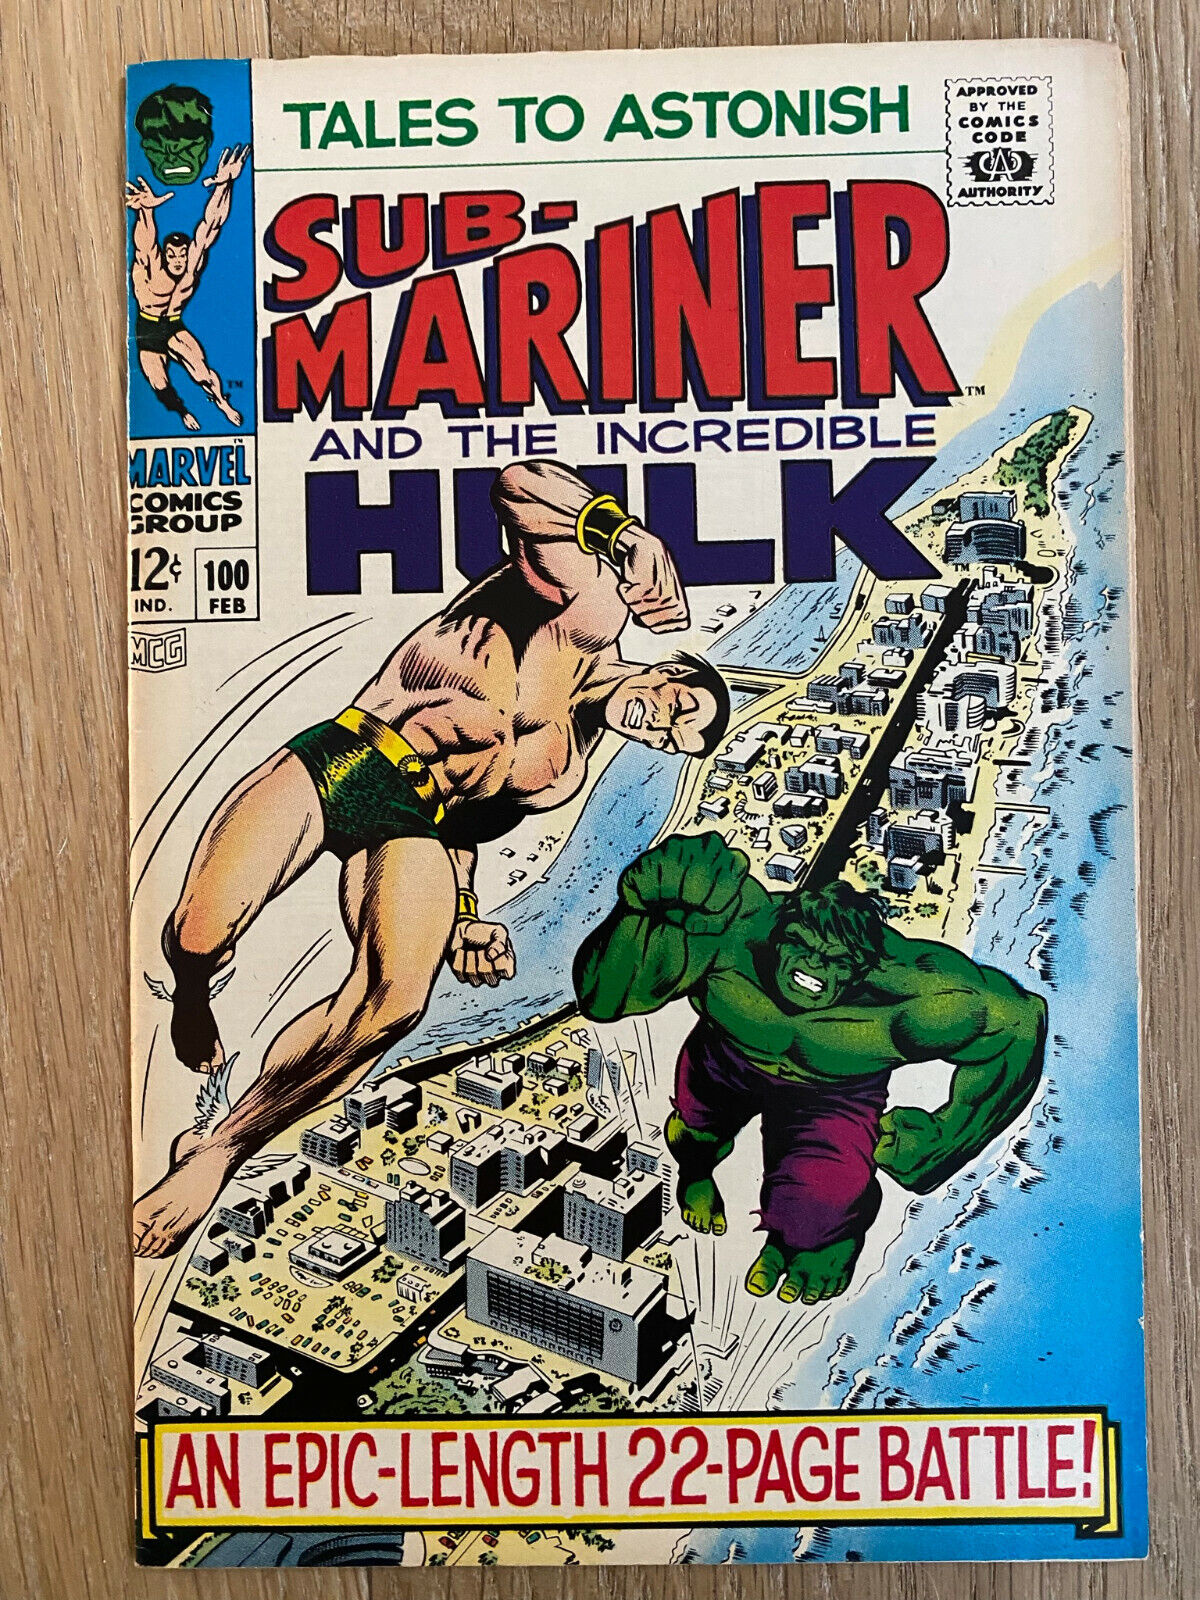 TALES TO ASTONISH #100 HULK AND SUB-MARINER (1968, Marvel)